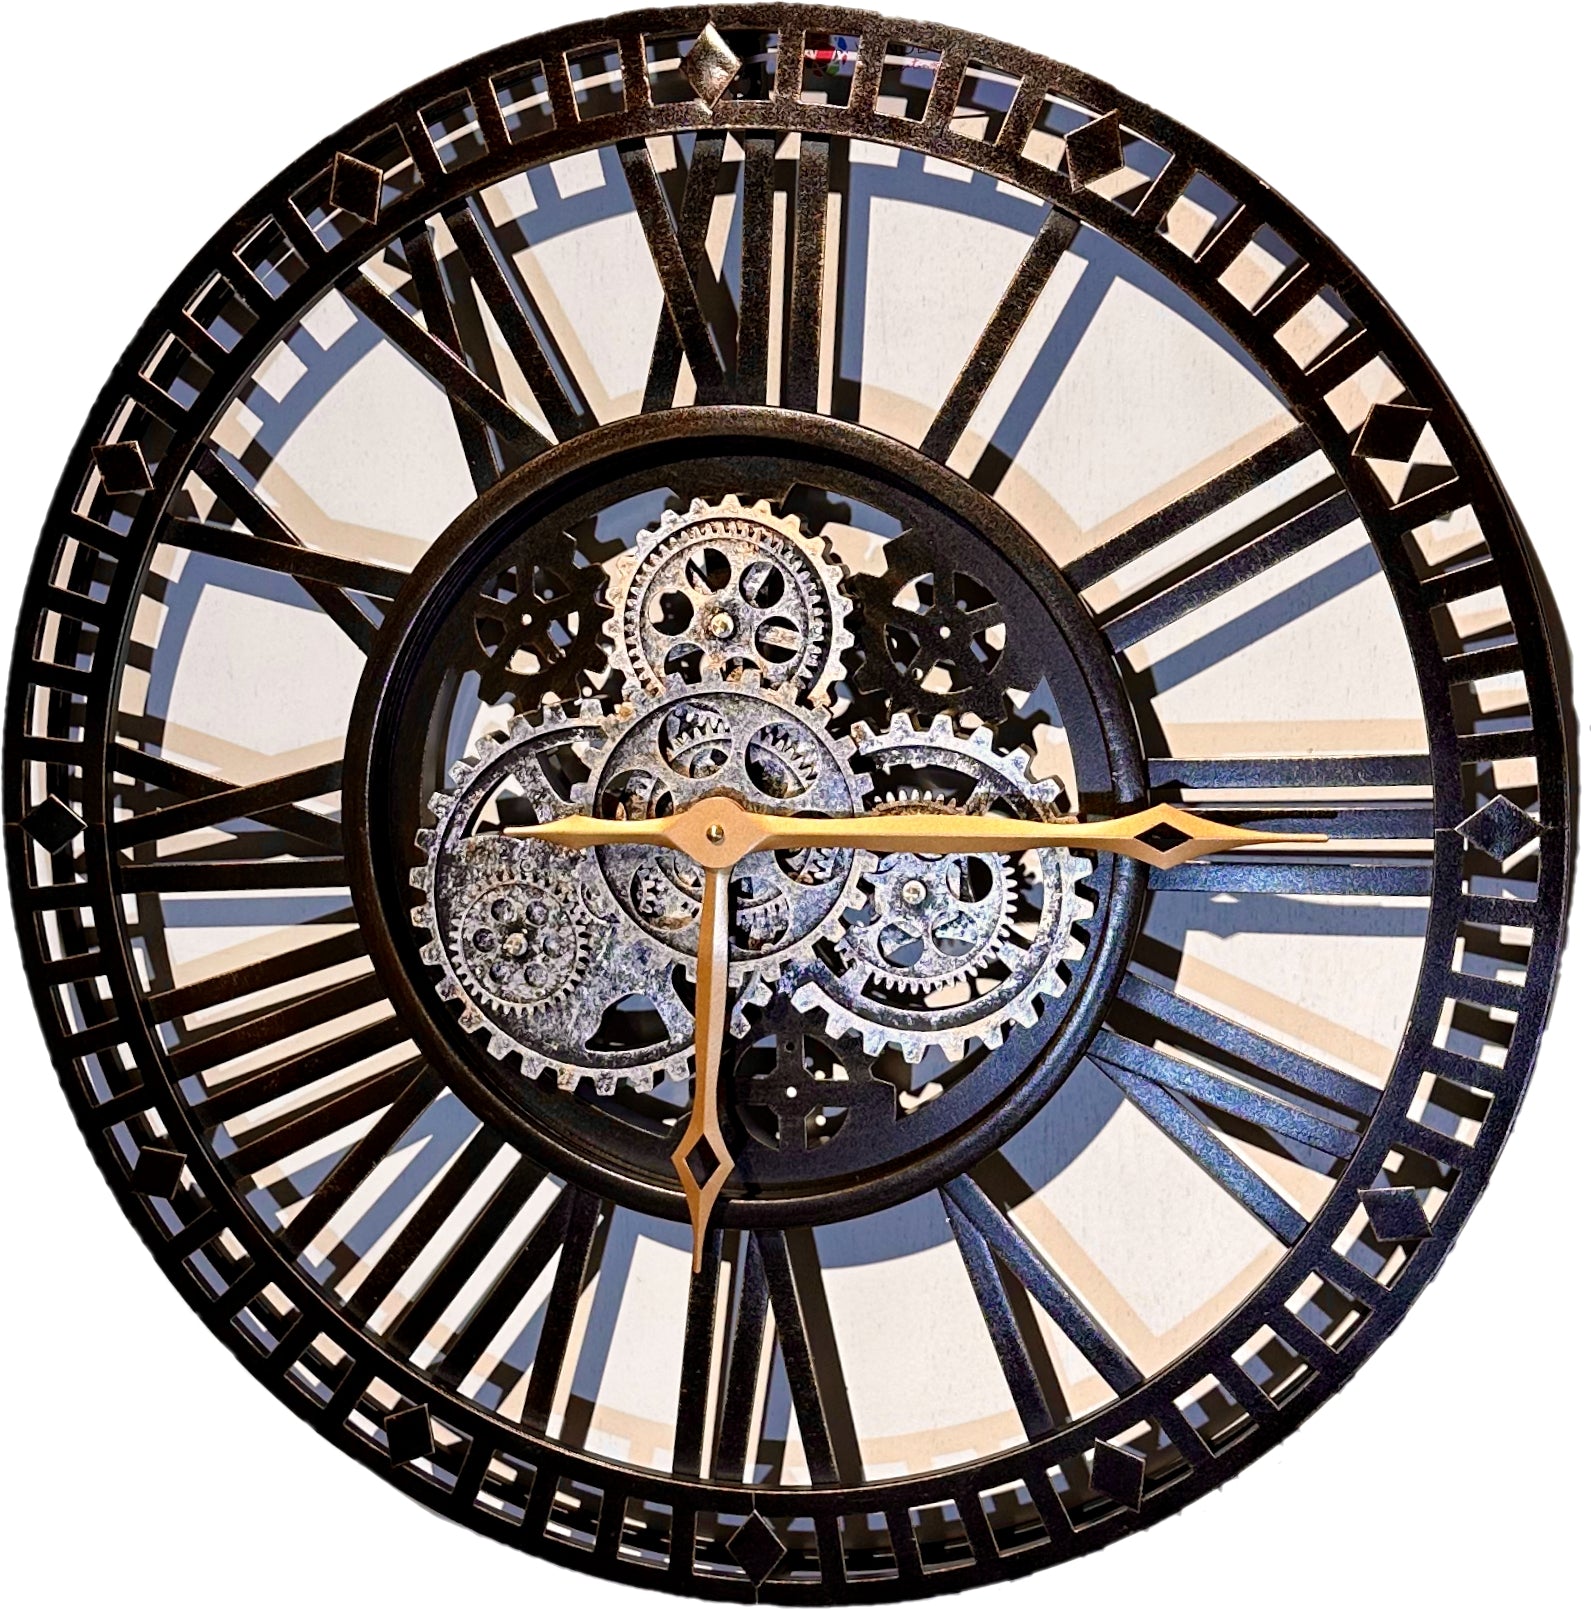 60 cm Wanduhr Xenia gold-schwarz silber Zahnrad Wand Uhr Industrial